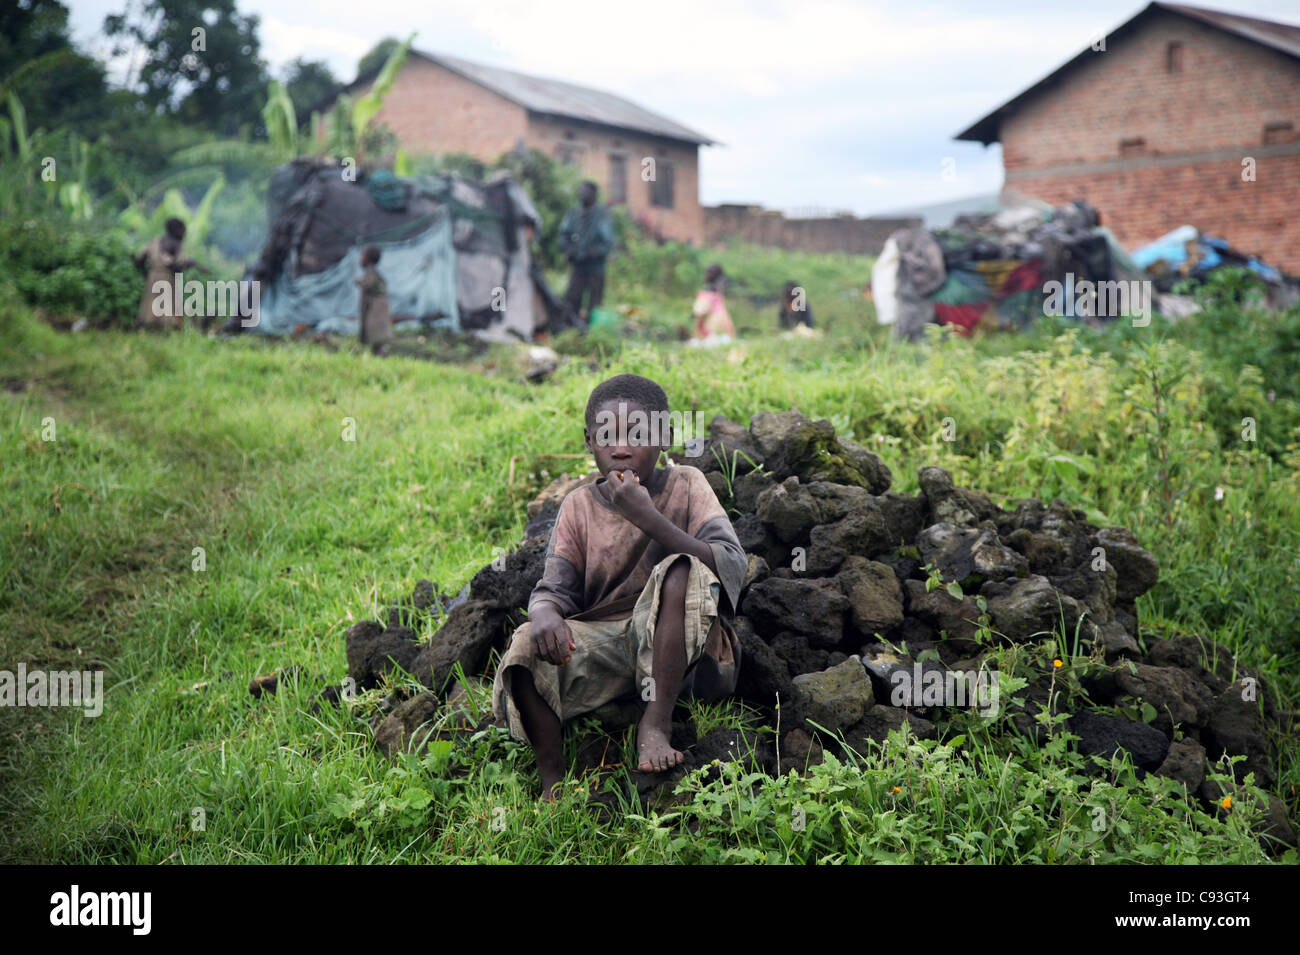 Displaced Congolese boy living in a makeshift shelter, Kisoro, South West Uganda, East Africa. 28/1/2009. Photograph: Stuart Boulton/Alamy Stock Photo